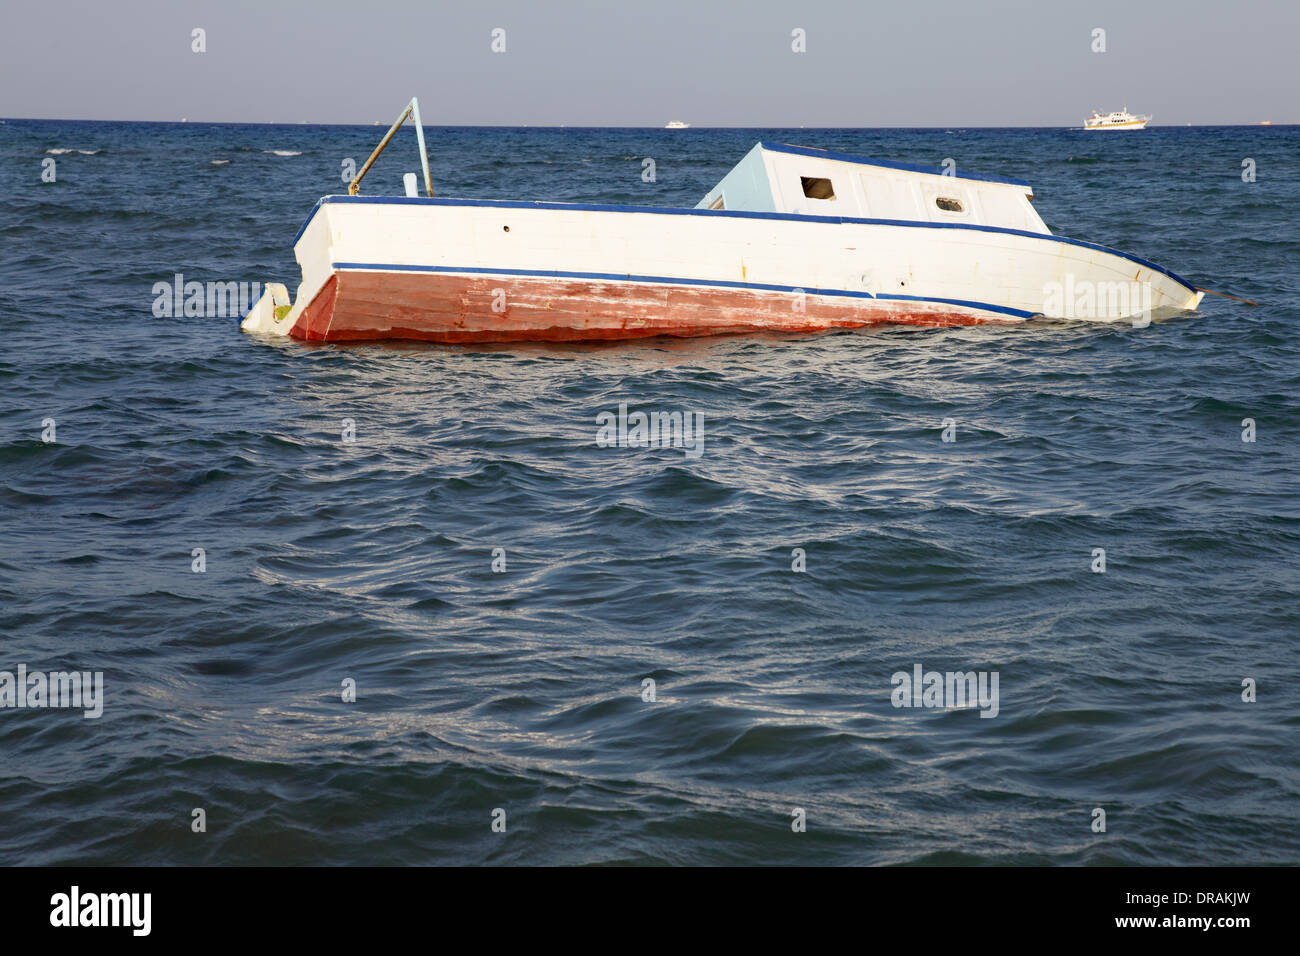 sunken boat in the sea Stock Photo